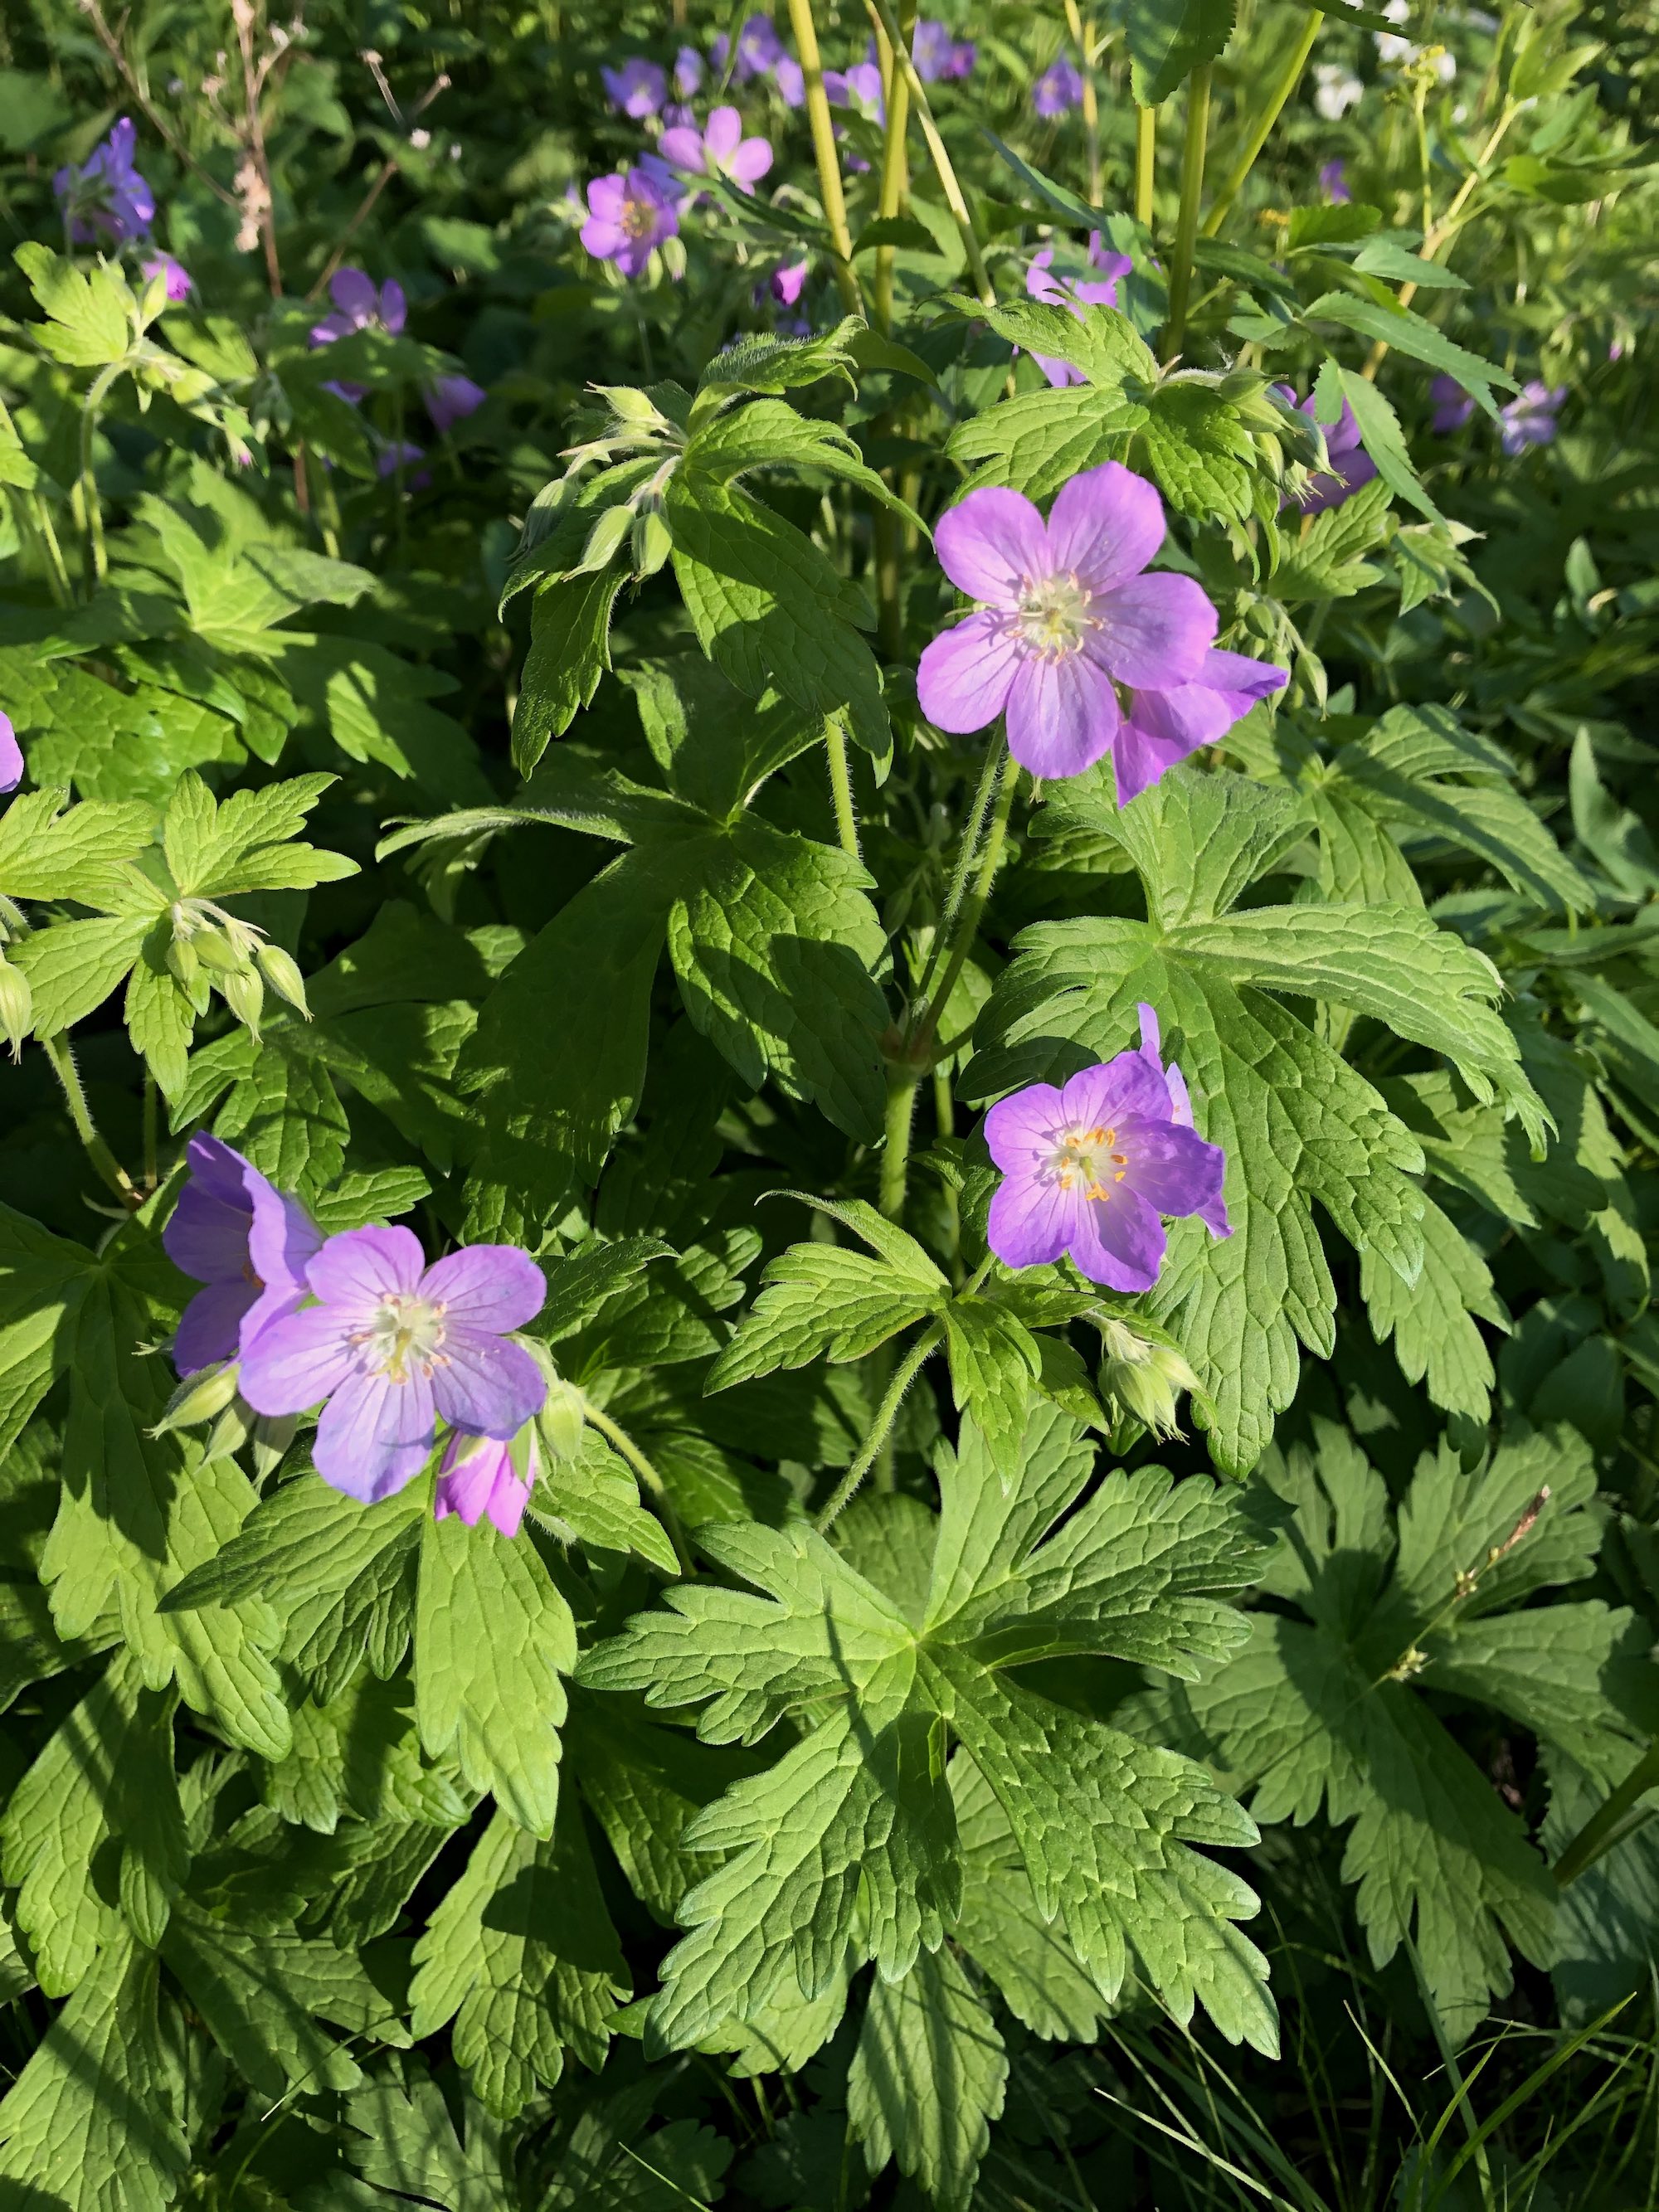 Wild Geranium in Thoreau Rain Garden on May 12, 2021.